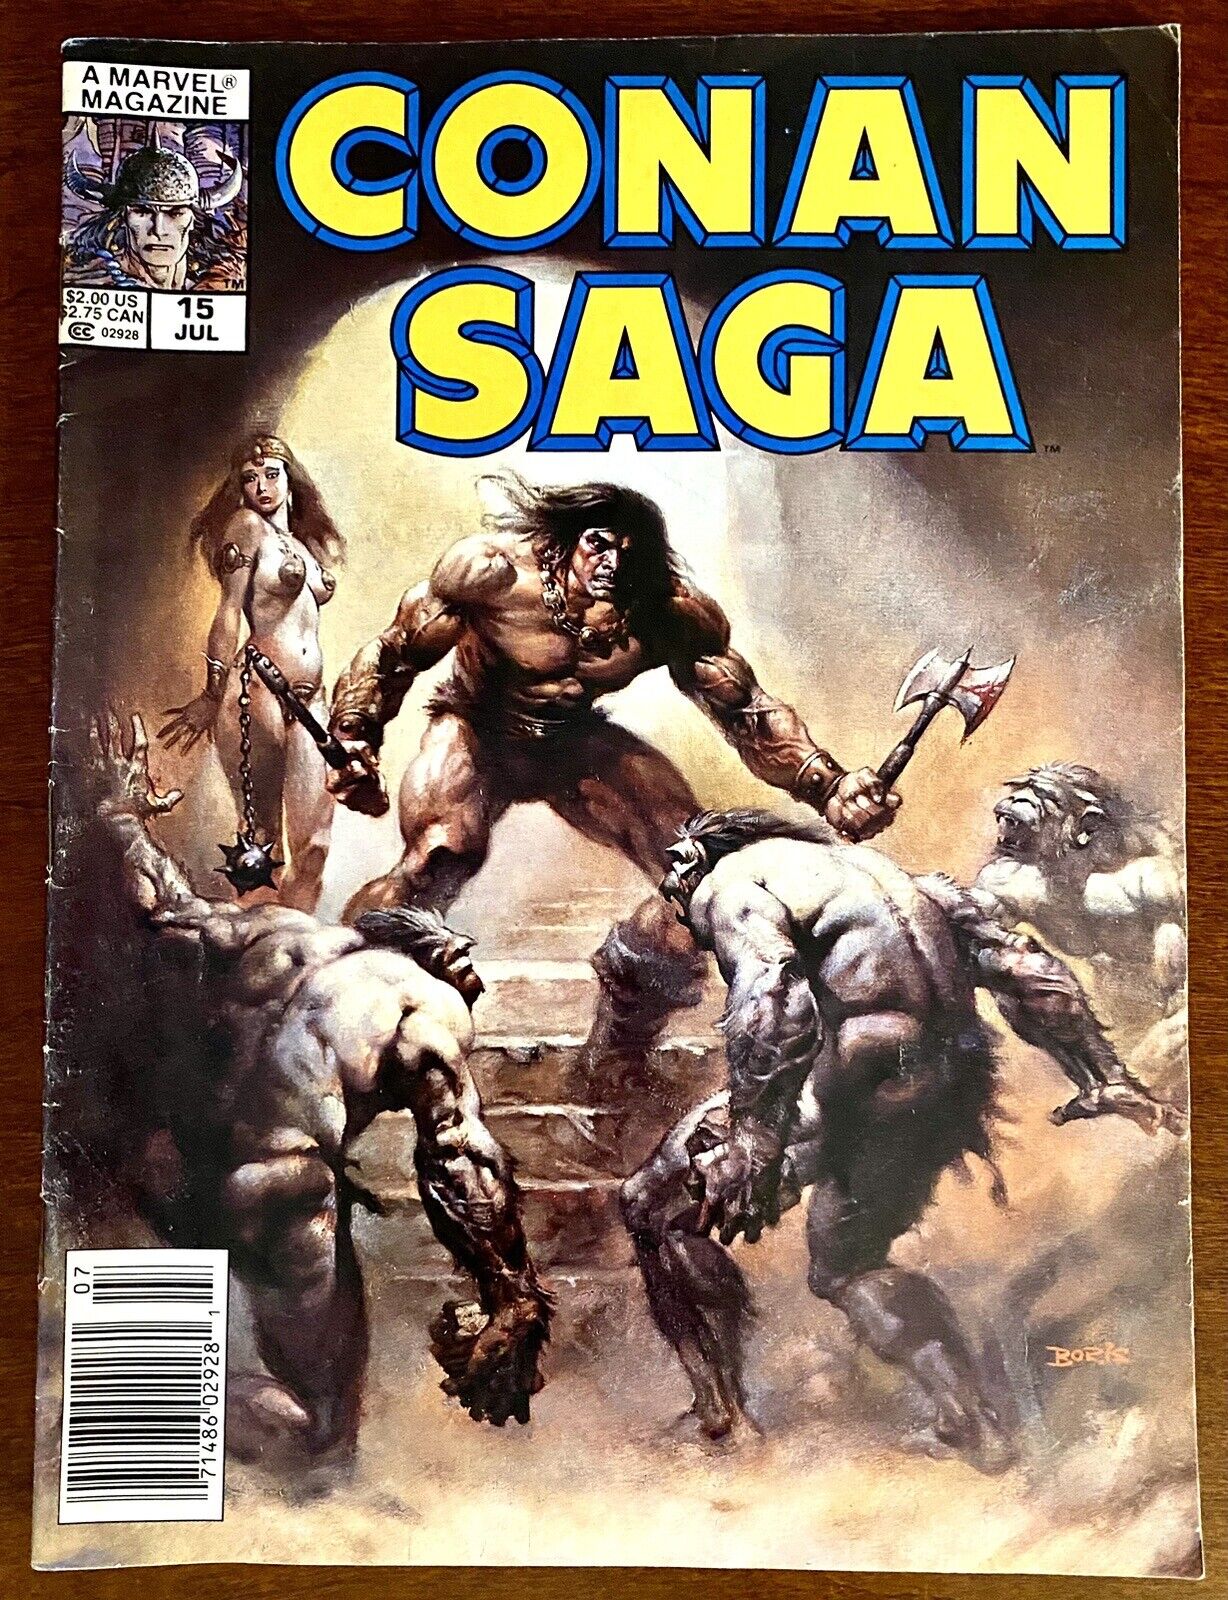 CONAN SAGA #15 Marvel Magazine, Jul 1988 Boris Vellejo Cover Grade 6.0